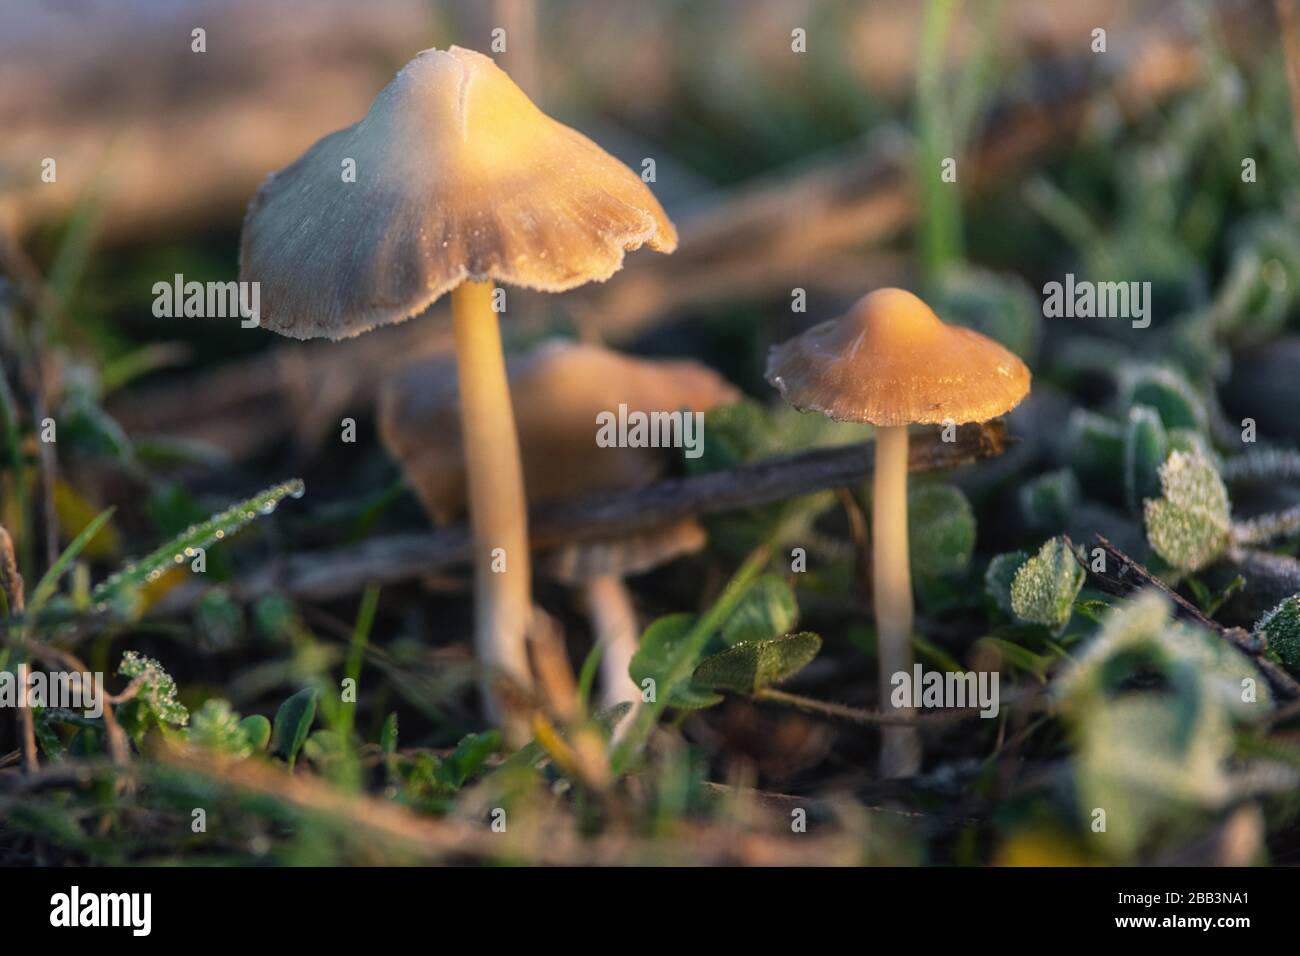 Hallucinogenic Liberty Cap Mushrooms or Psilocybe semilanceata in the green grass background close up. Stock Photo